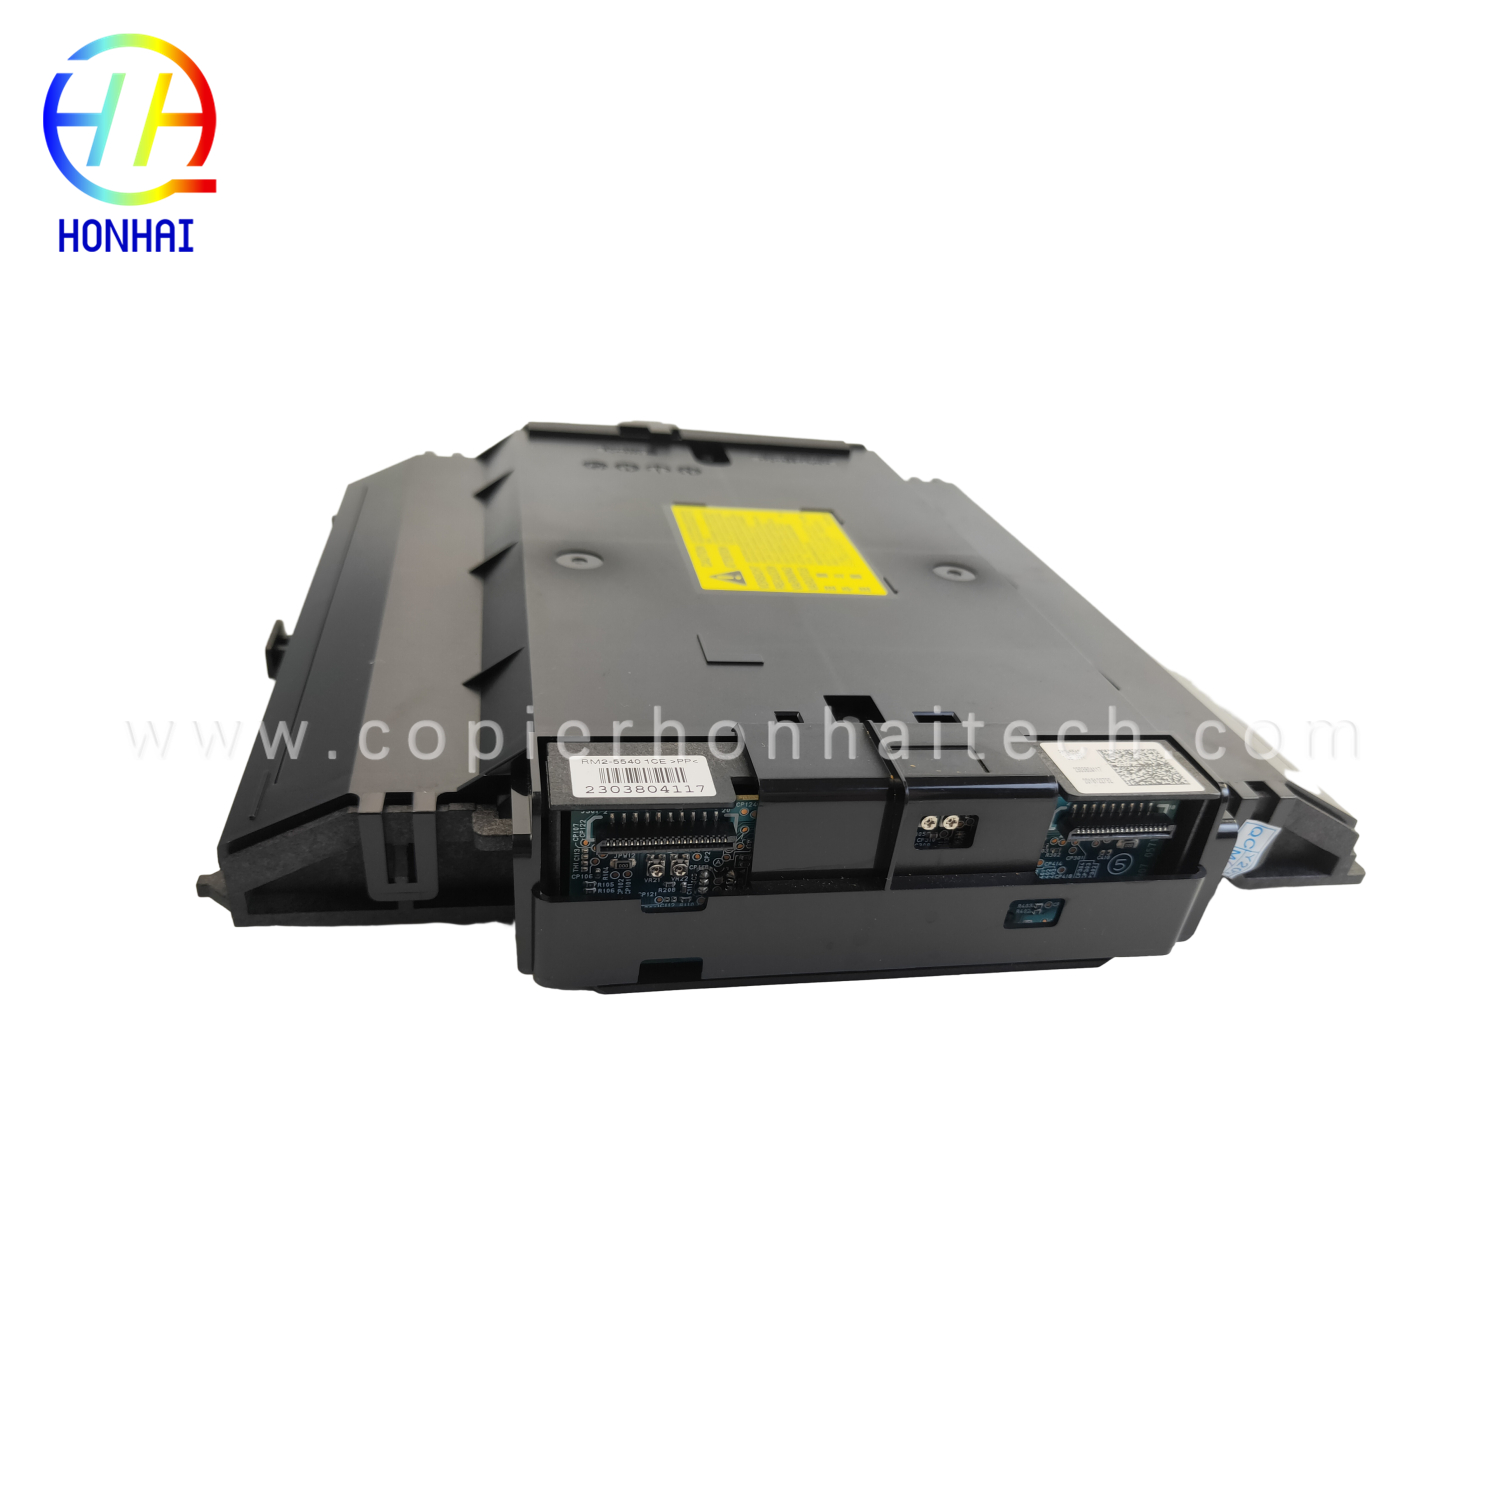 https://www.copierhonhaitech.com/original-laser-scanner-for-hp-m277-product/